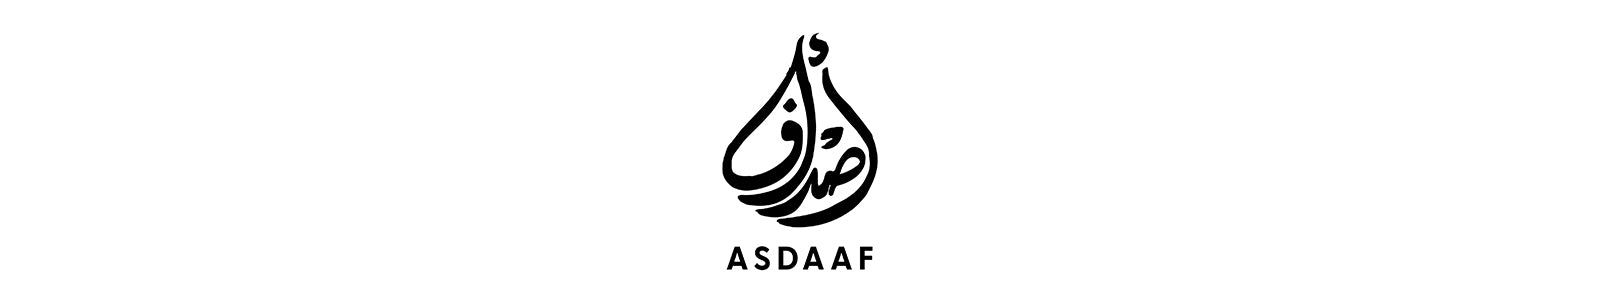 Asdaaf